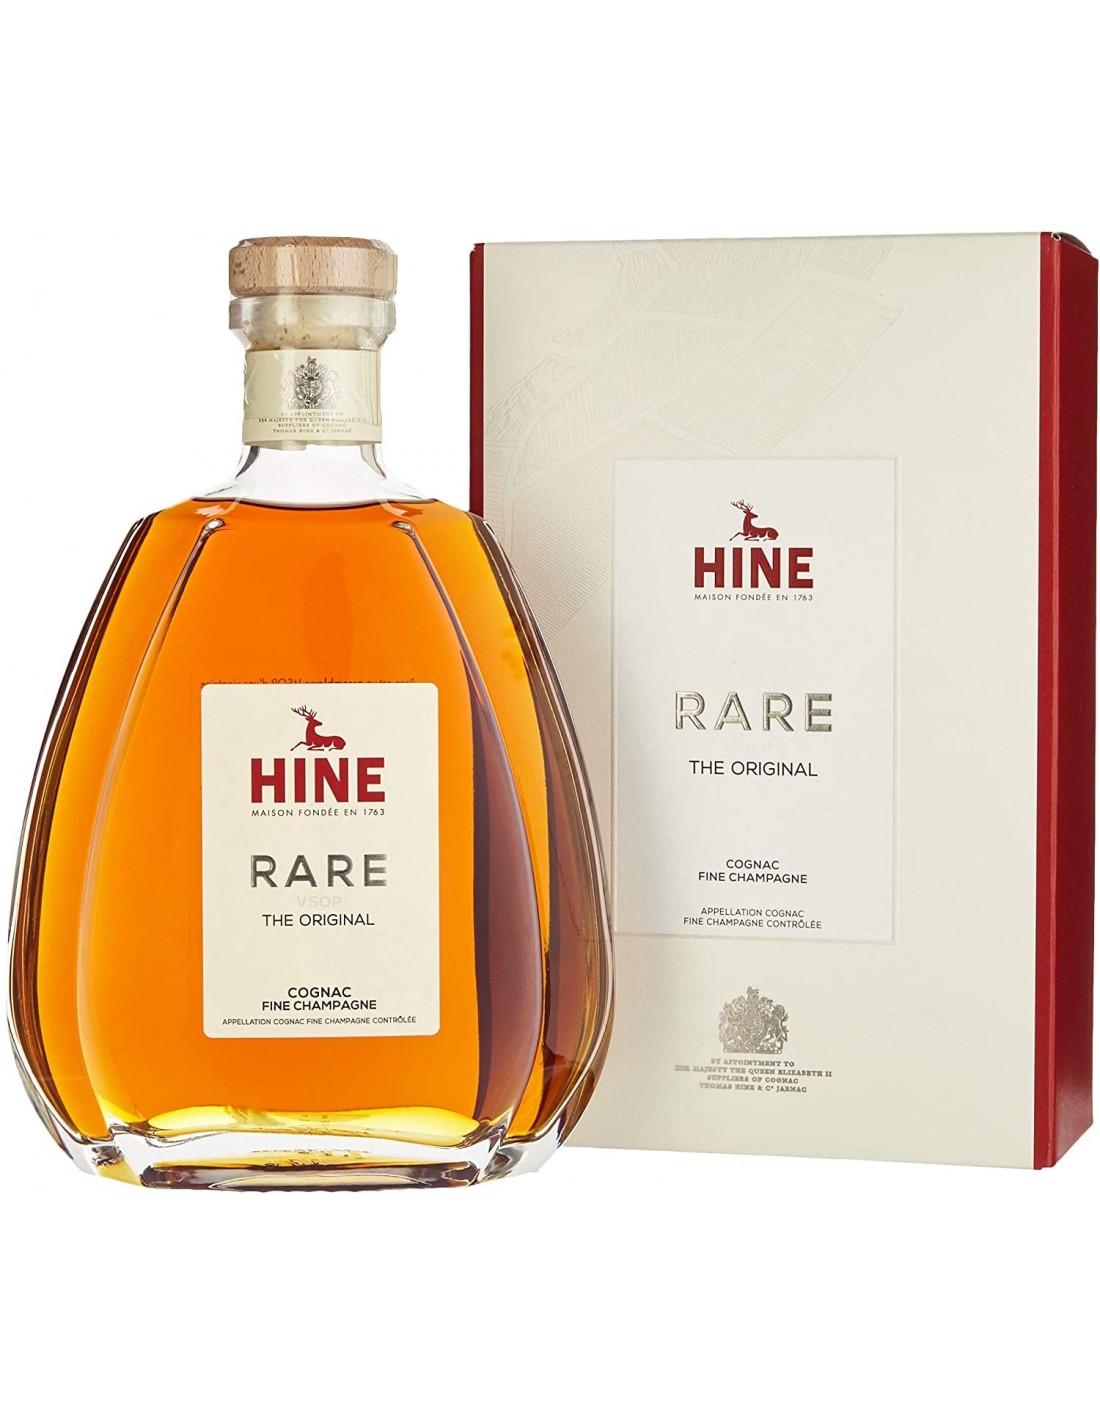 Brandy Hine Rare VSOP Fine, 40% alc., 0.7L, Franta alcooldiscount.ro